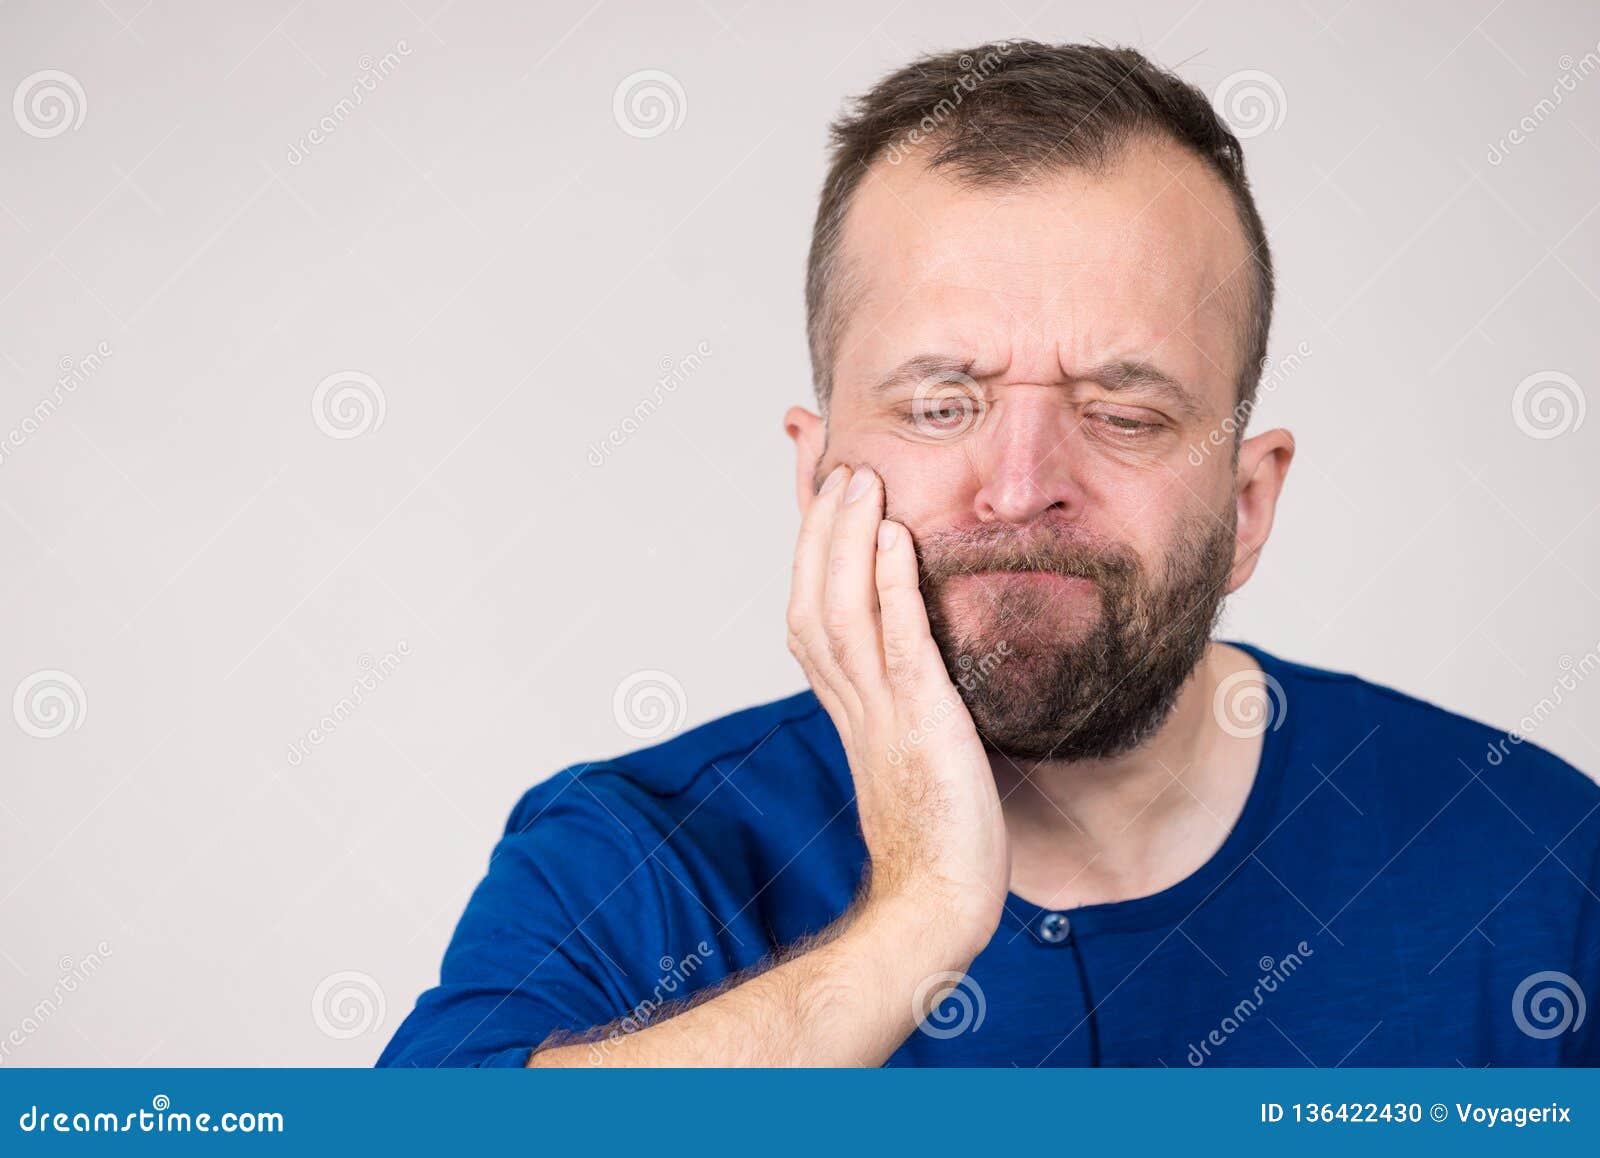 Man having tooth pain stock photo. Image of ache, teeth - 136422430